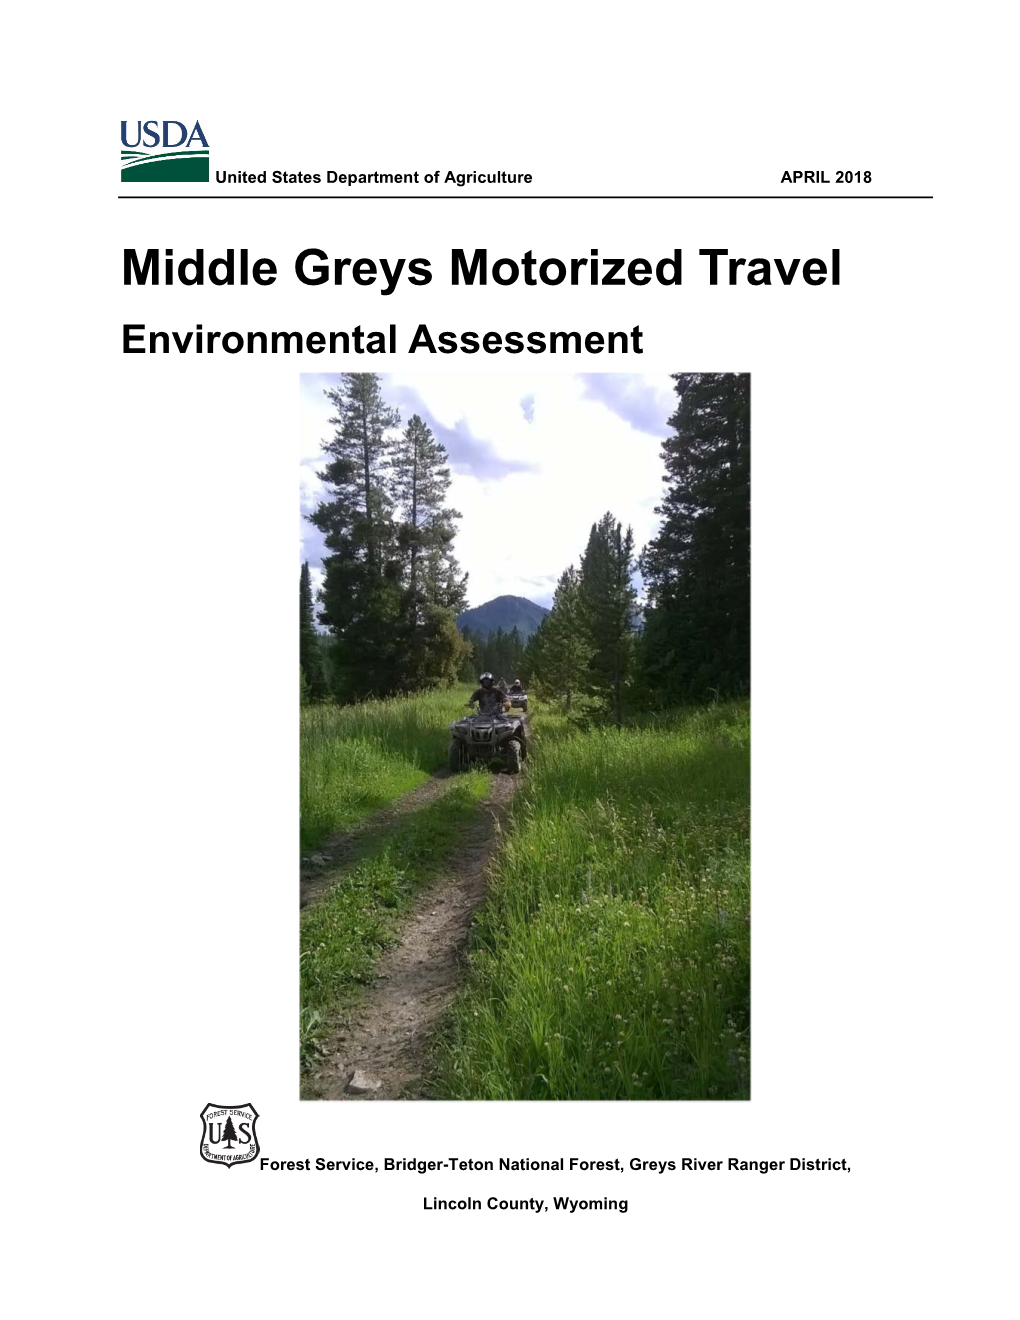 Middle Greys Motorized Travel Environmental Assessment